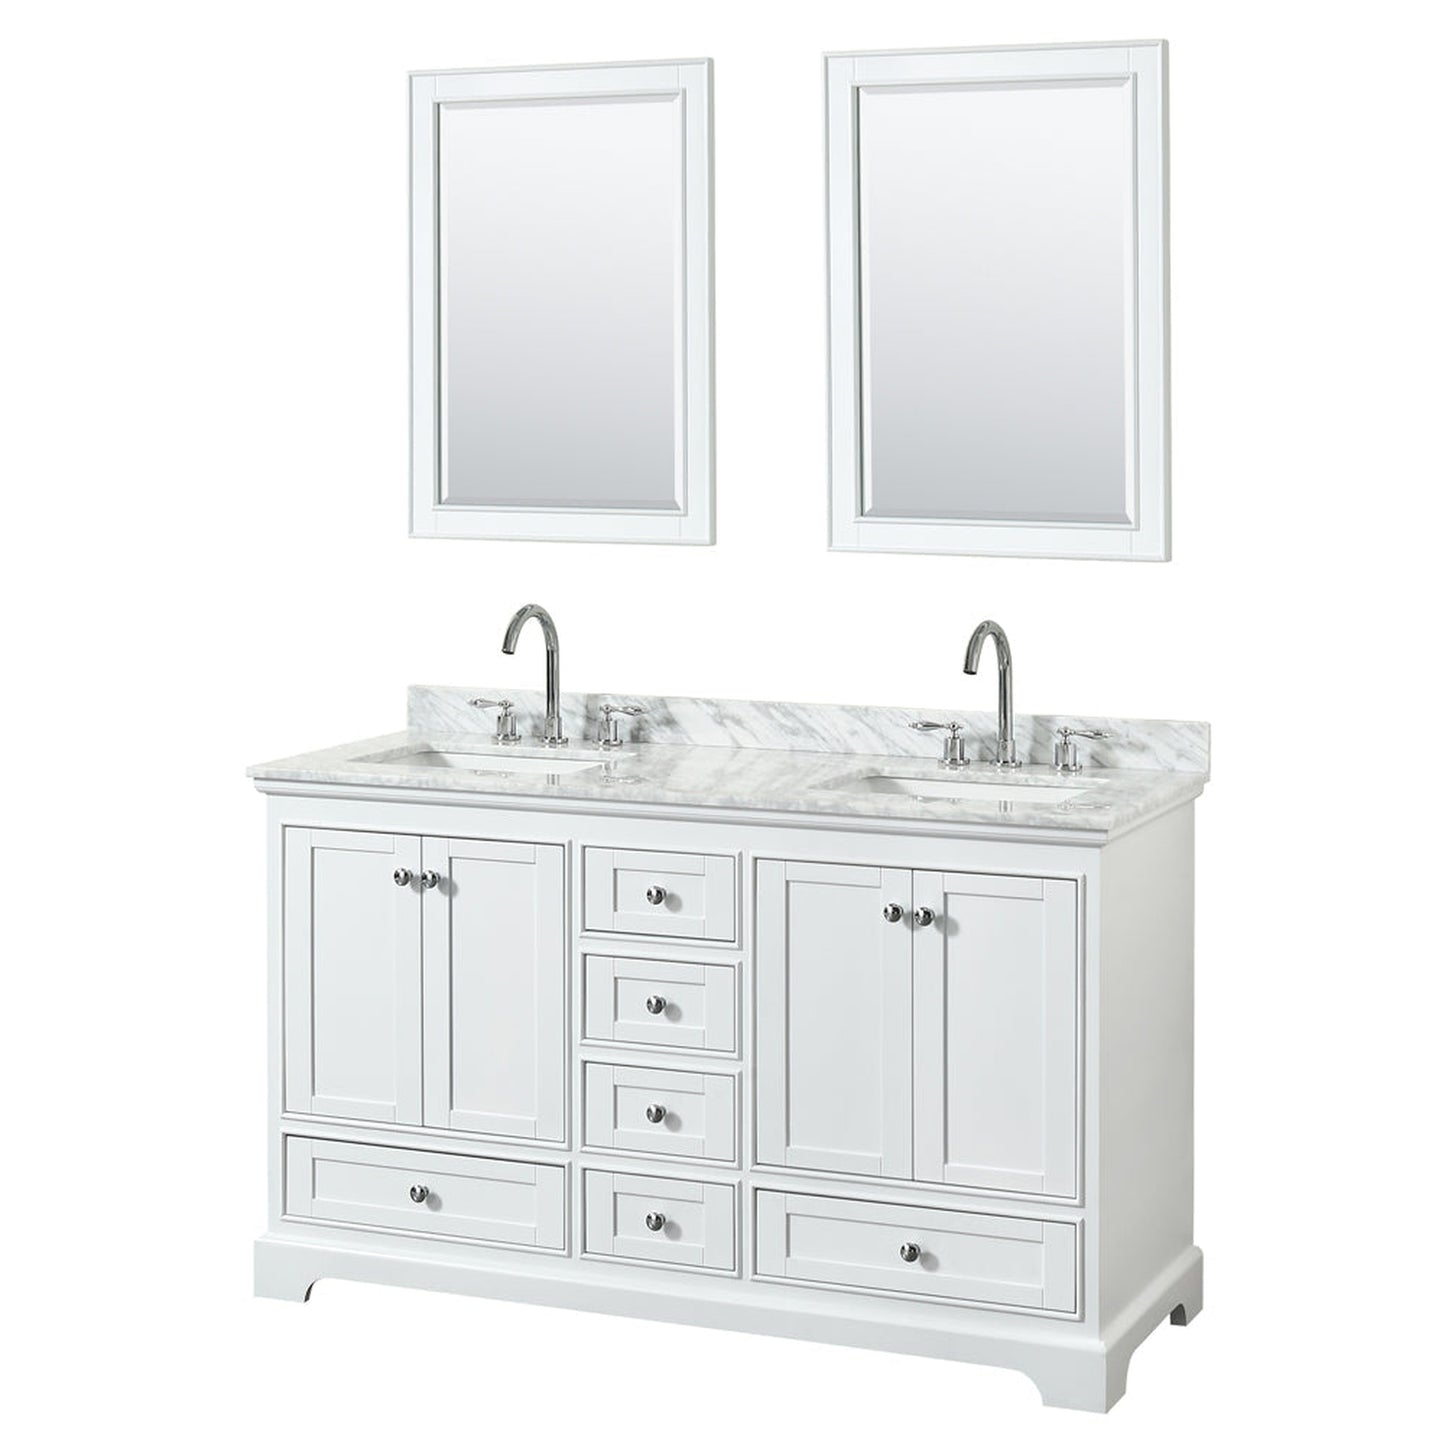 Wyndham Collection Deborah 60" Double Bathroom Vanity in White, White Carrara Marble Countertop, Undermount Square Sinks, and 24" Mirror